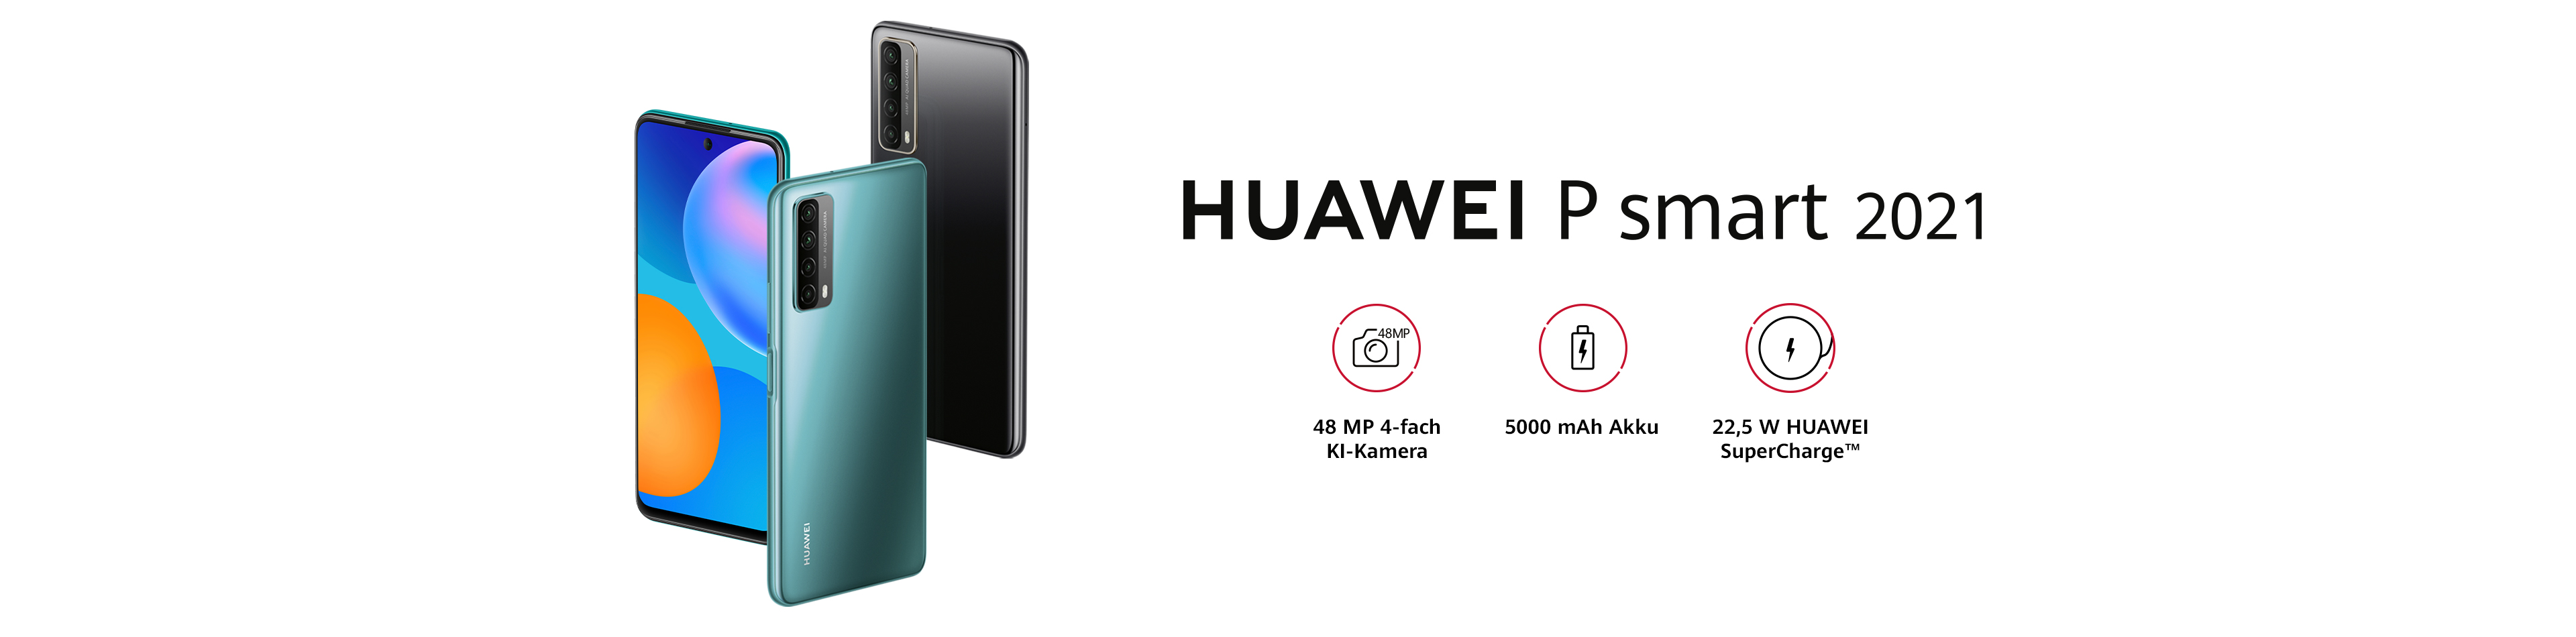 Huawei P Smart 21 Promotion